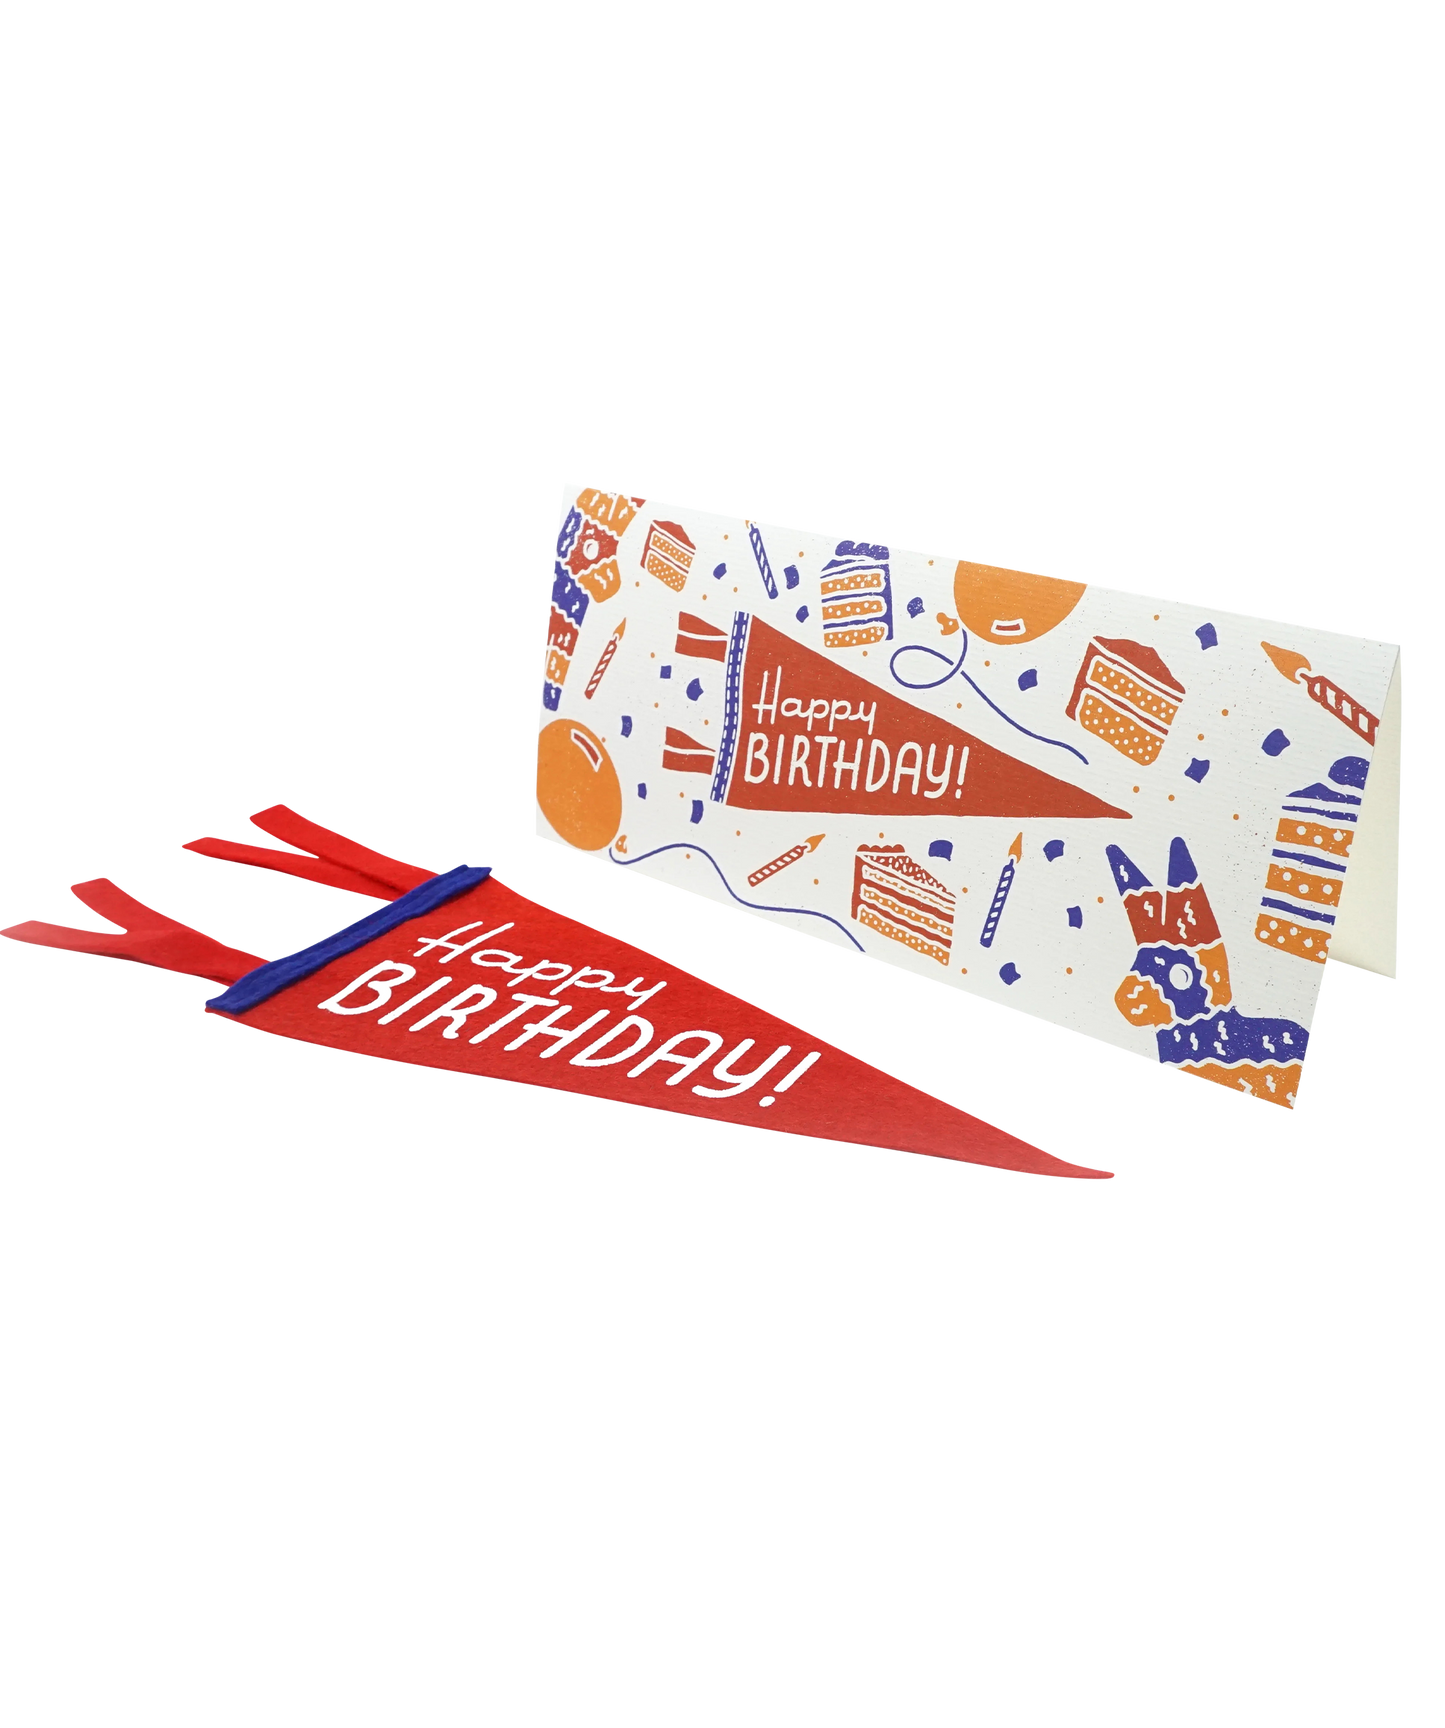 Happy Birthday! - Greeting Card & Matching Mini Pennant